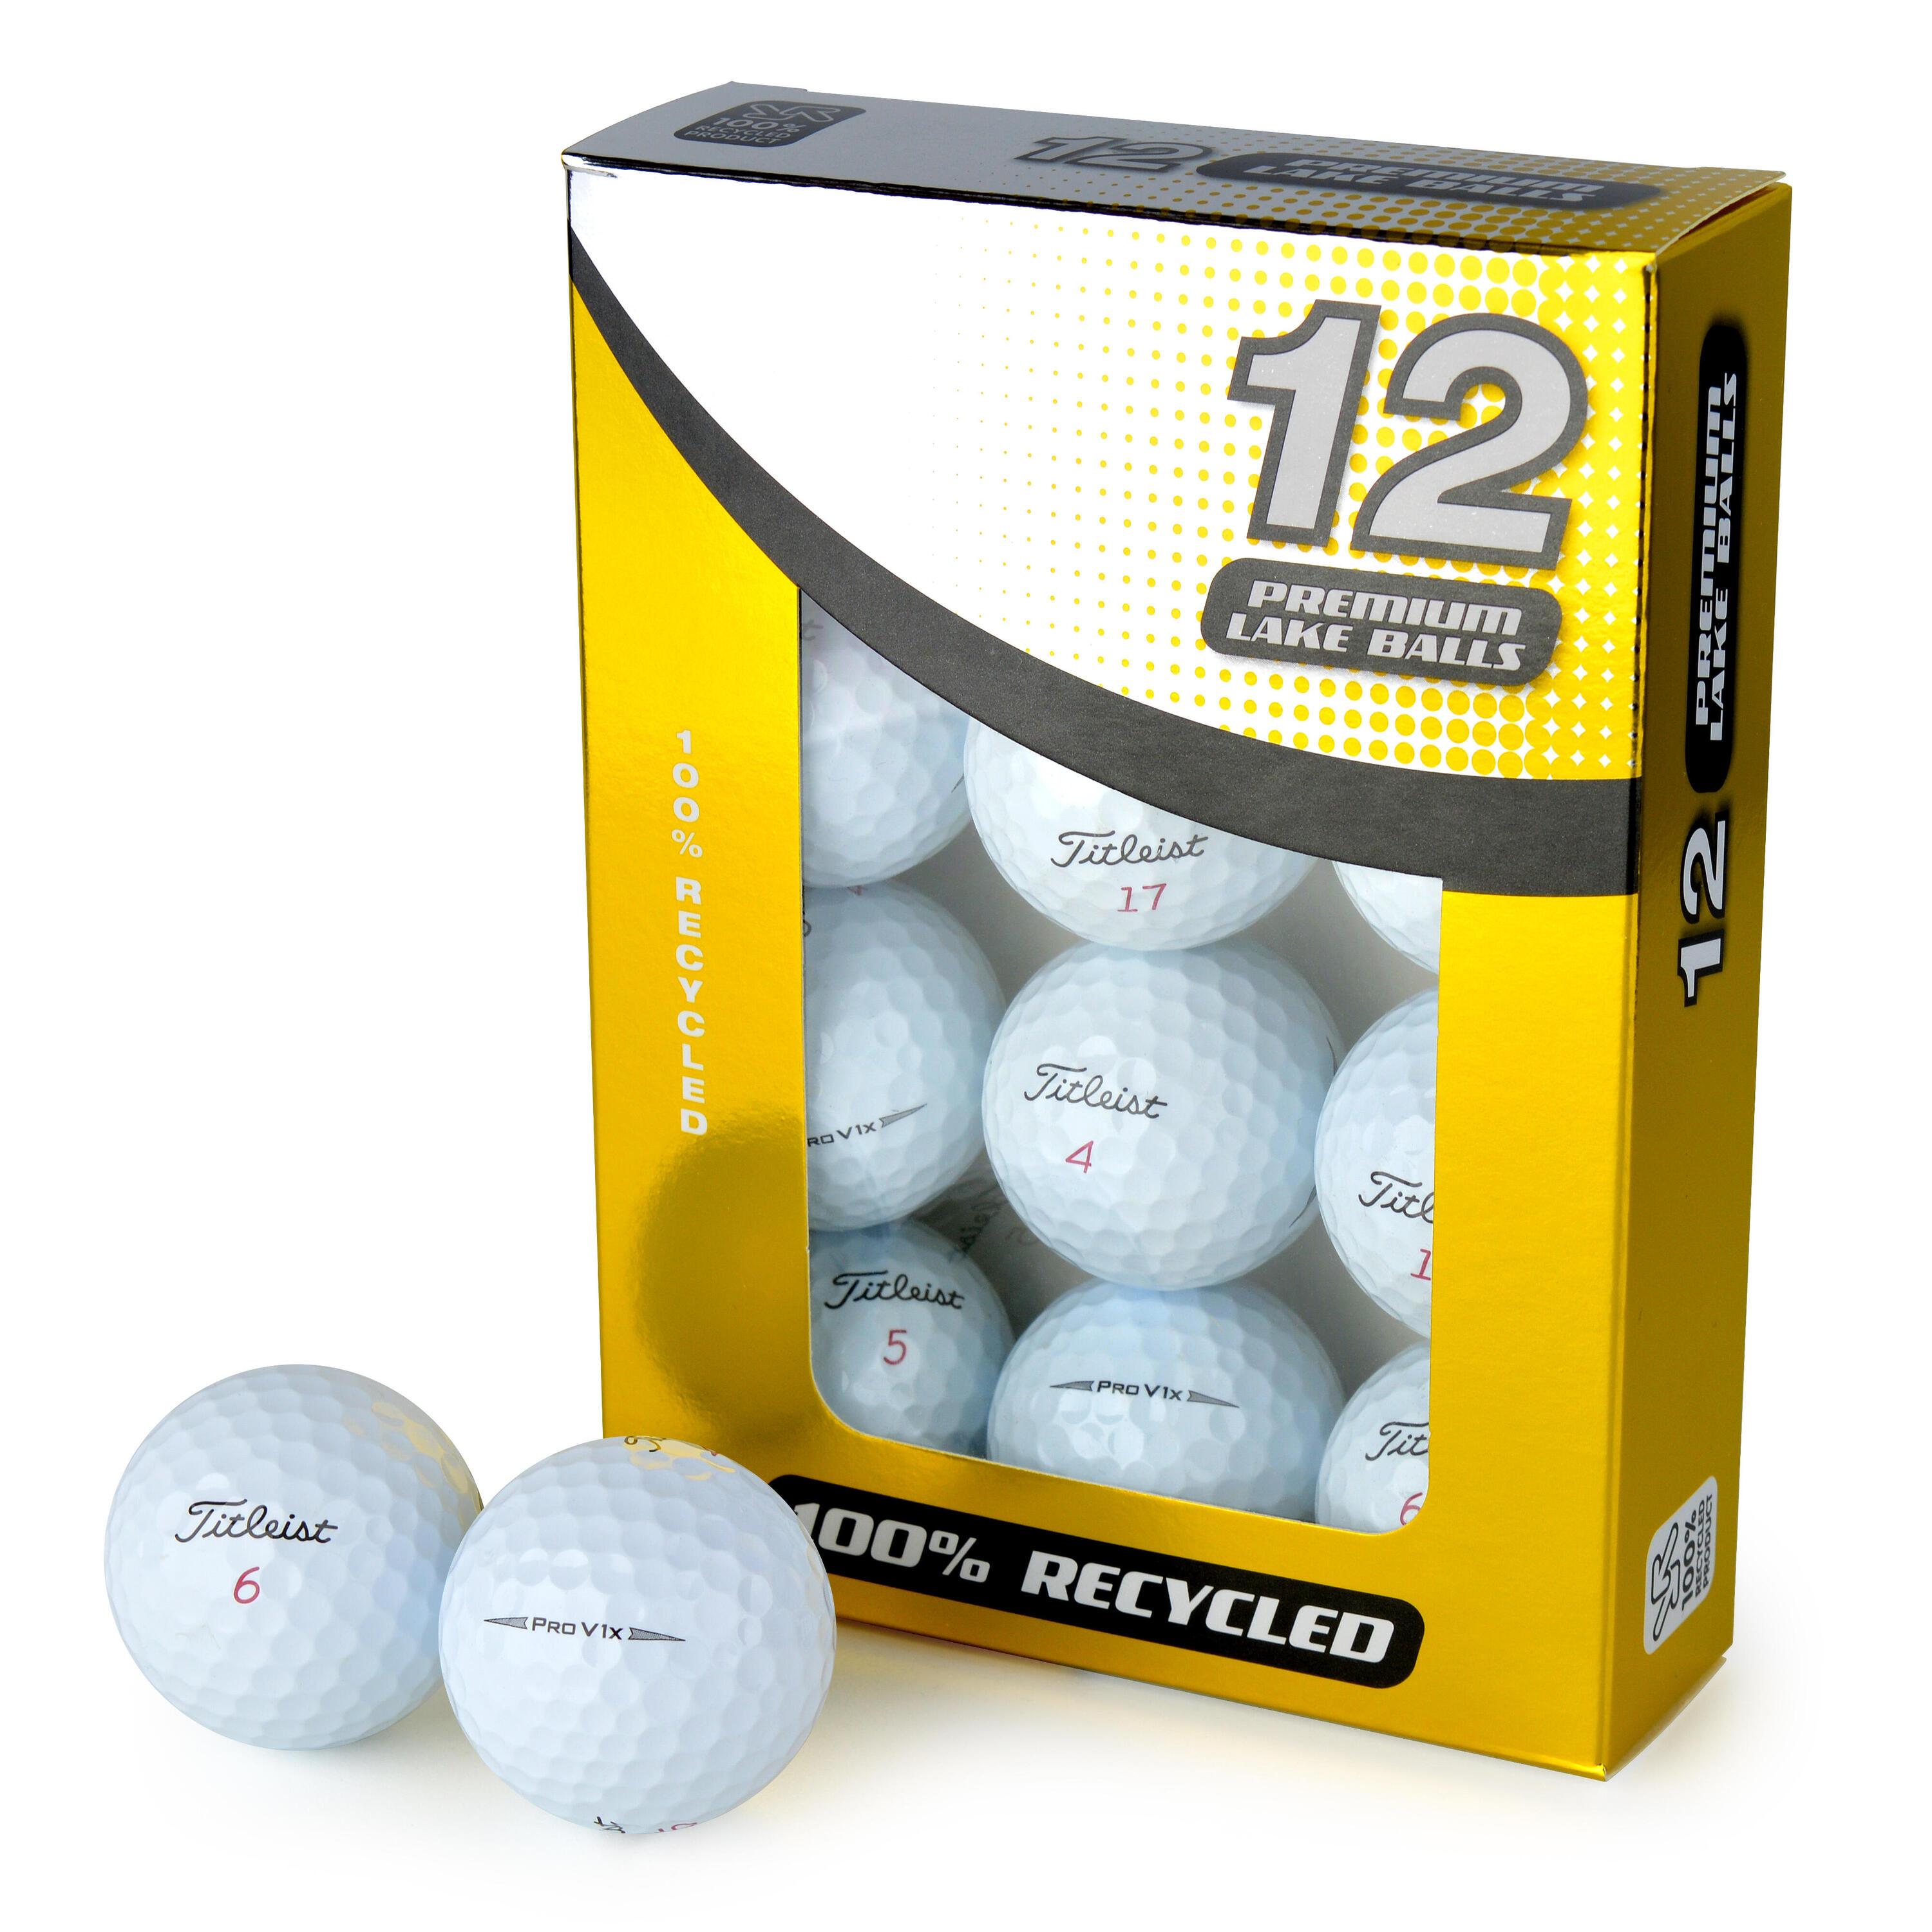 Second Chance Titleist Pro V1x Grade A Lake Golf Balls - White, Pack of 12 1/3